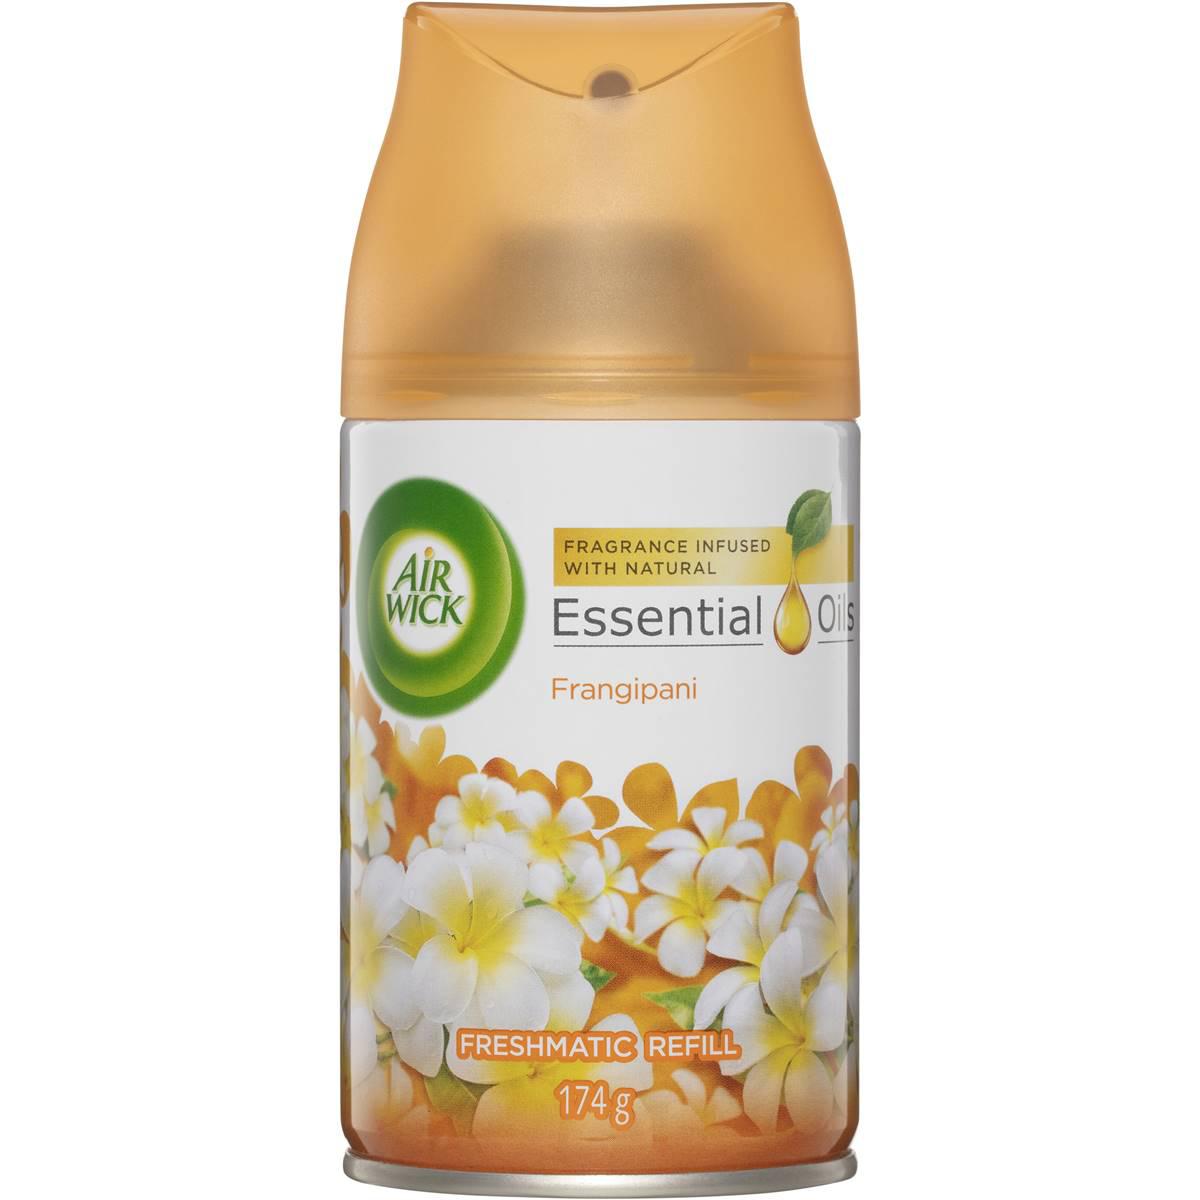 Airwick Essential Oil Freshmatic Refill Frangipani 174g